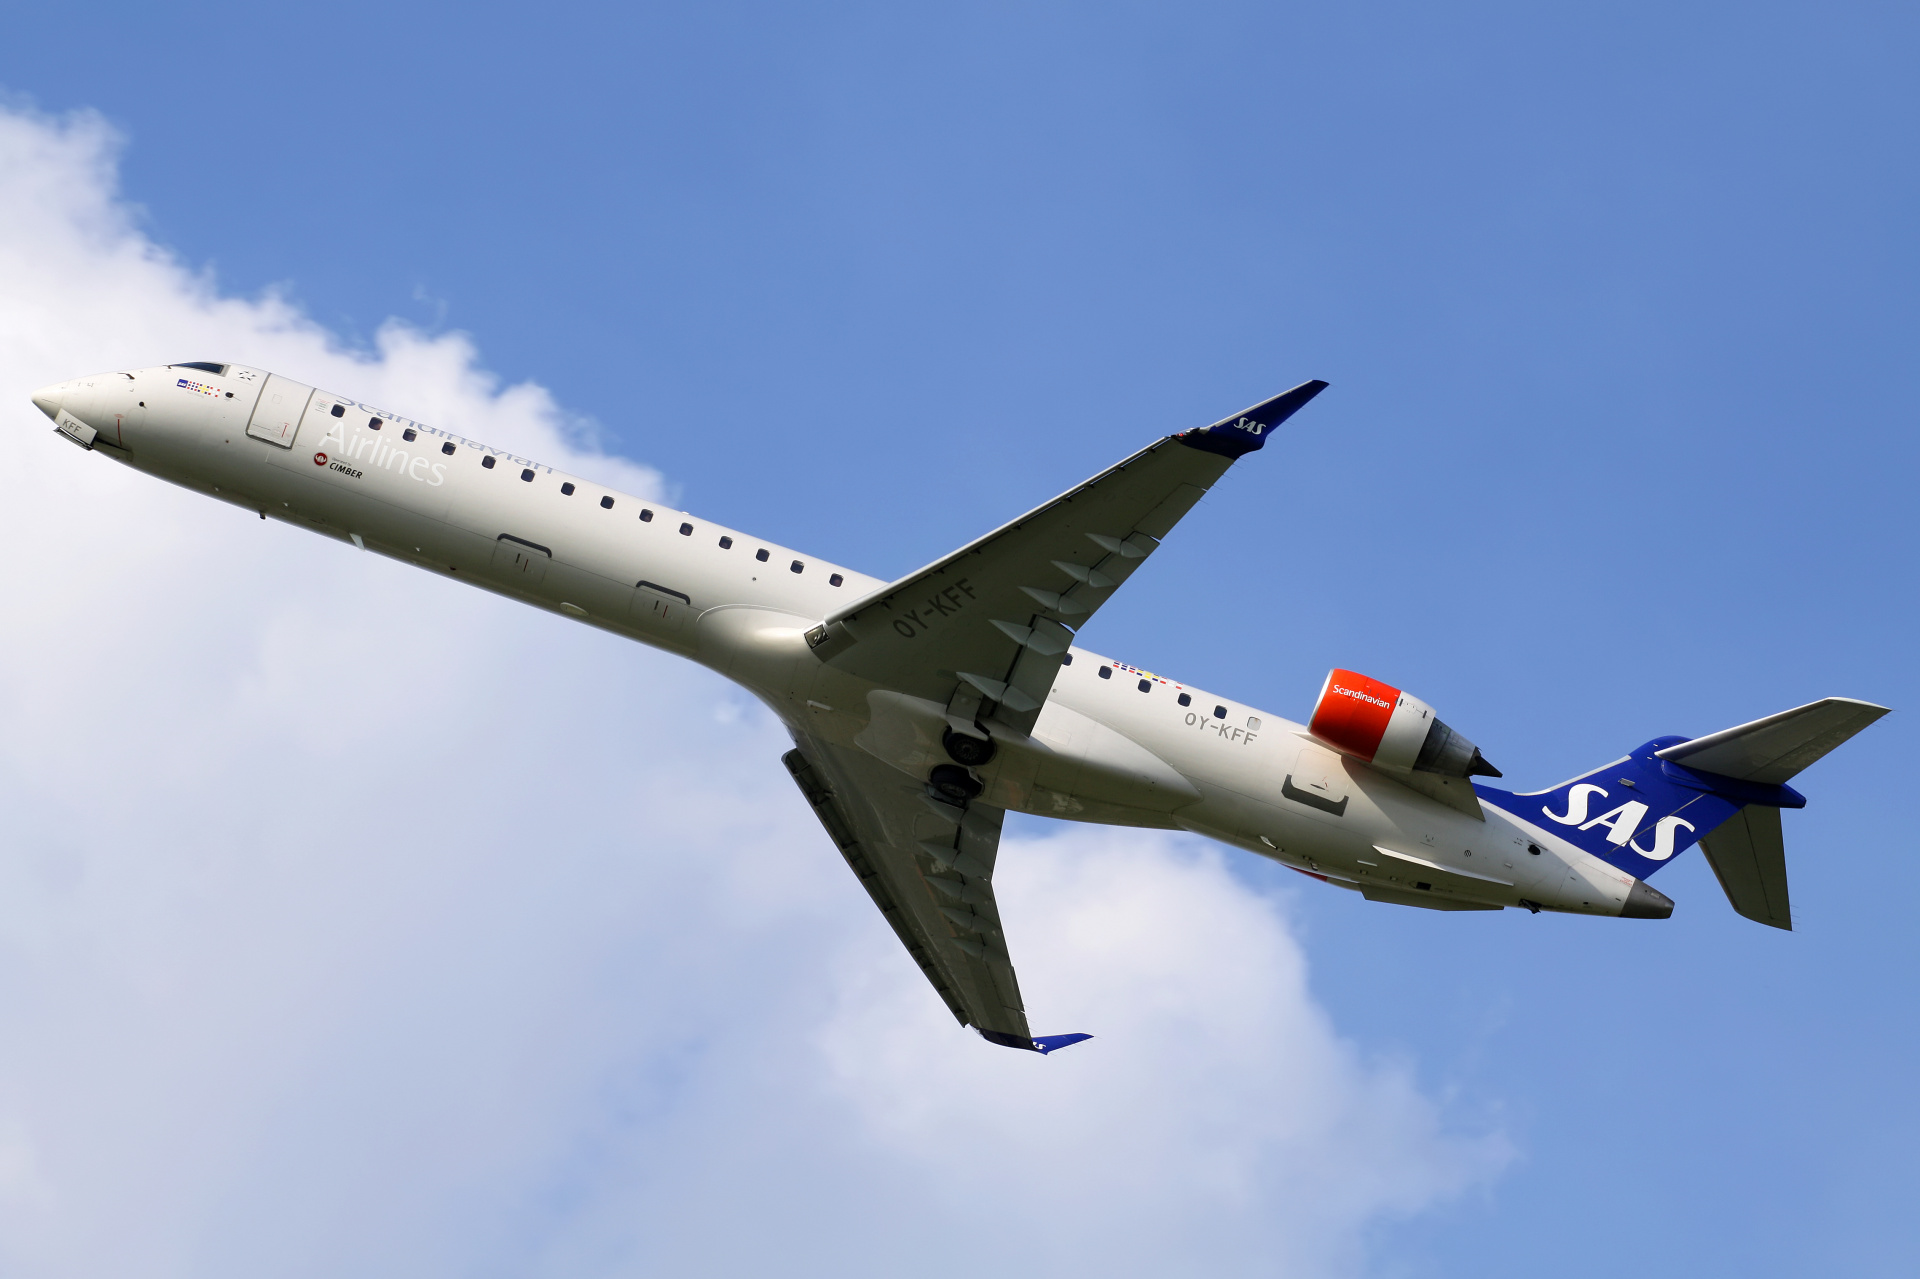 OY-KFF (Cimber Air) (Aircraft » EPWA Spotting » Mitsubishi Regional Jet » CRJ-900 » SAS Scandinavian Airlines)